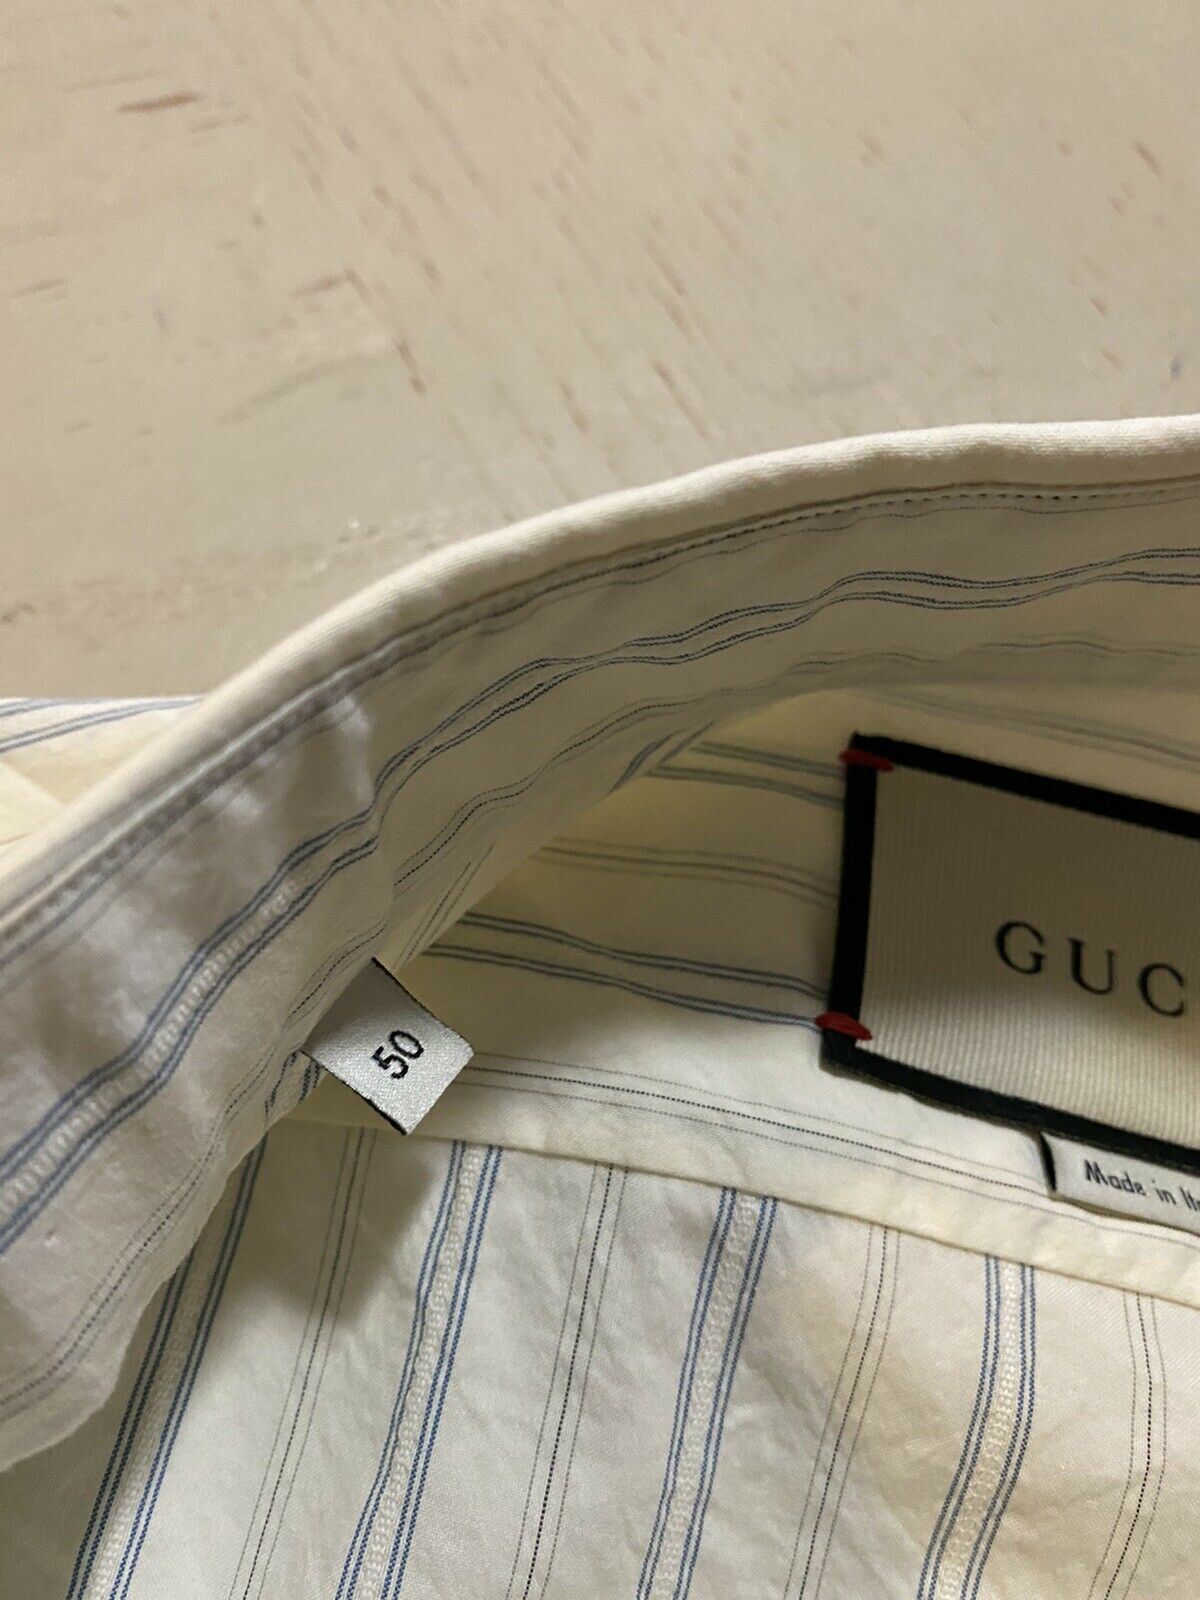 New Gucci Men’s Washed Stripe Oversized Shirt Nat. White/Blue XL ( 50 Eu ) Italy